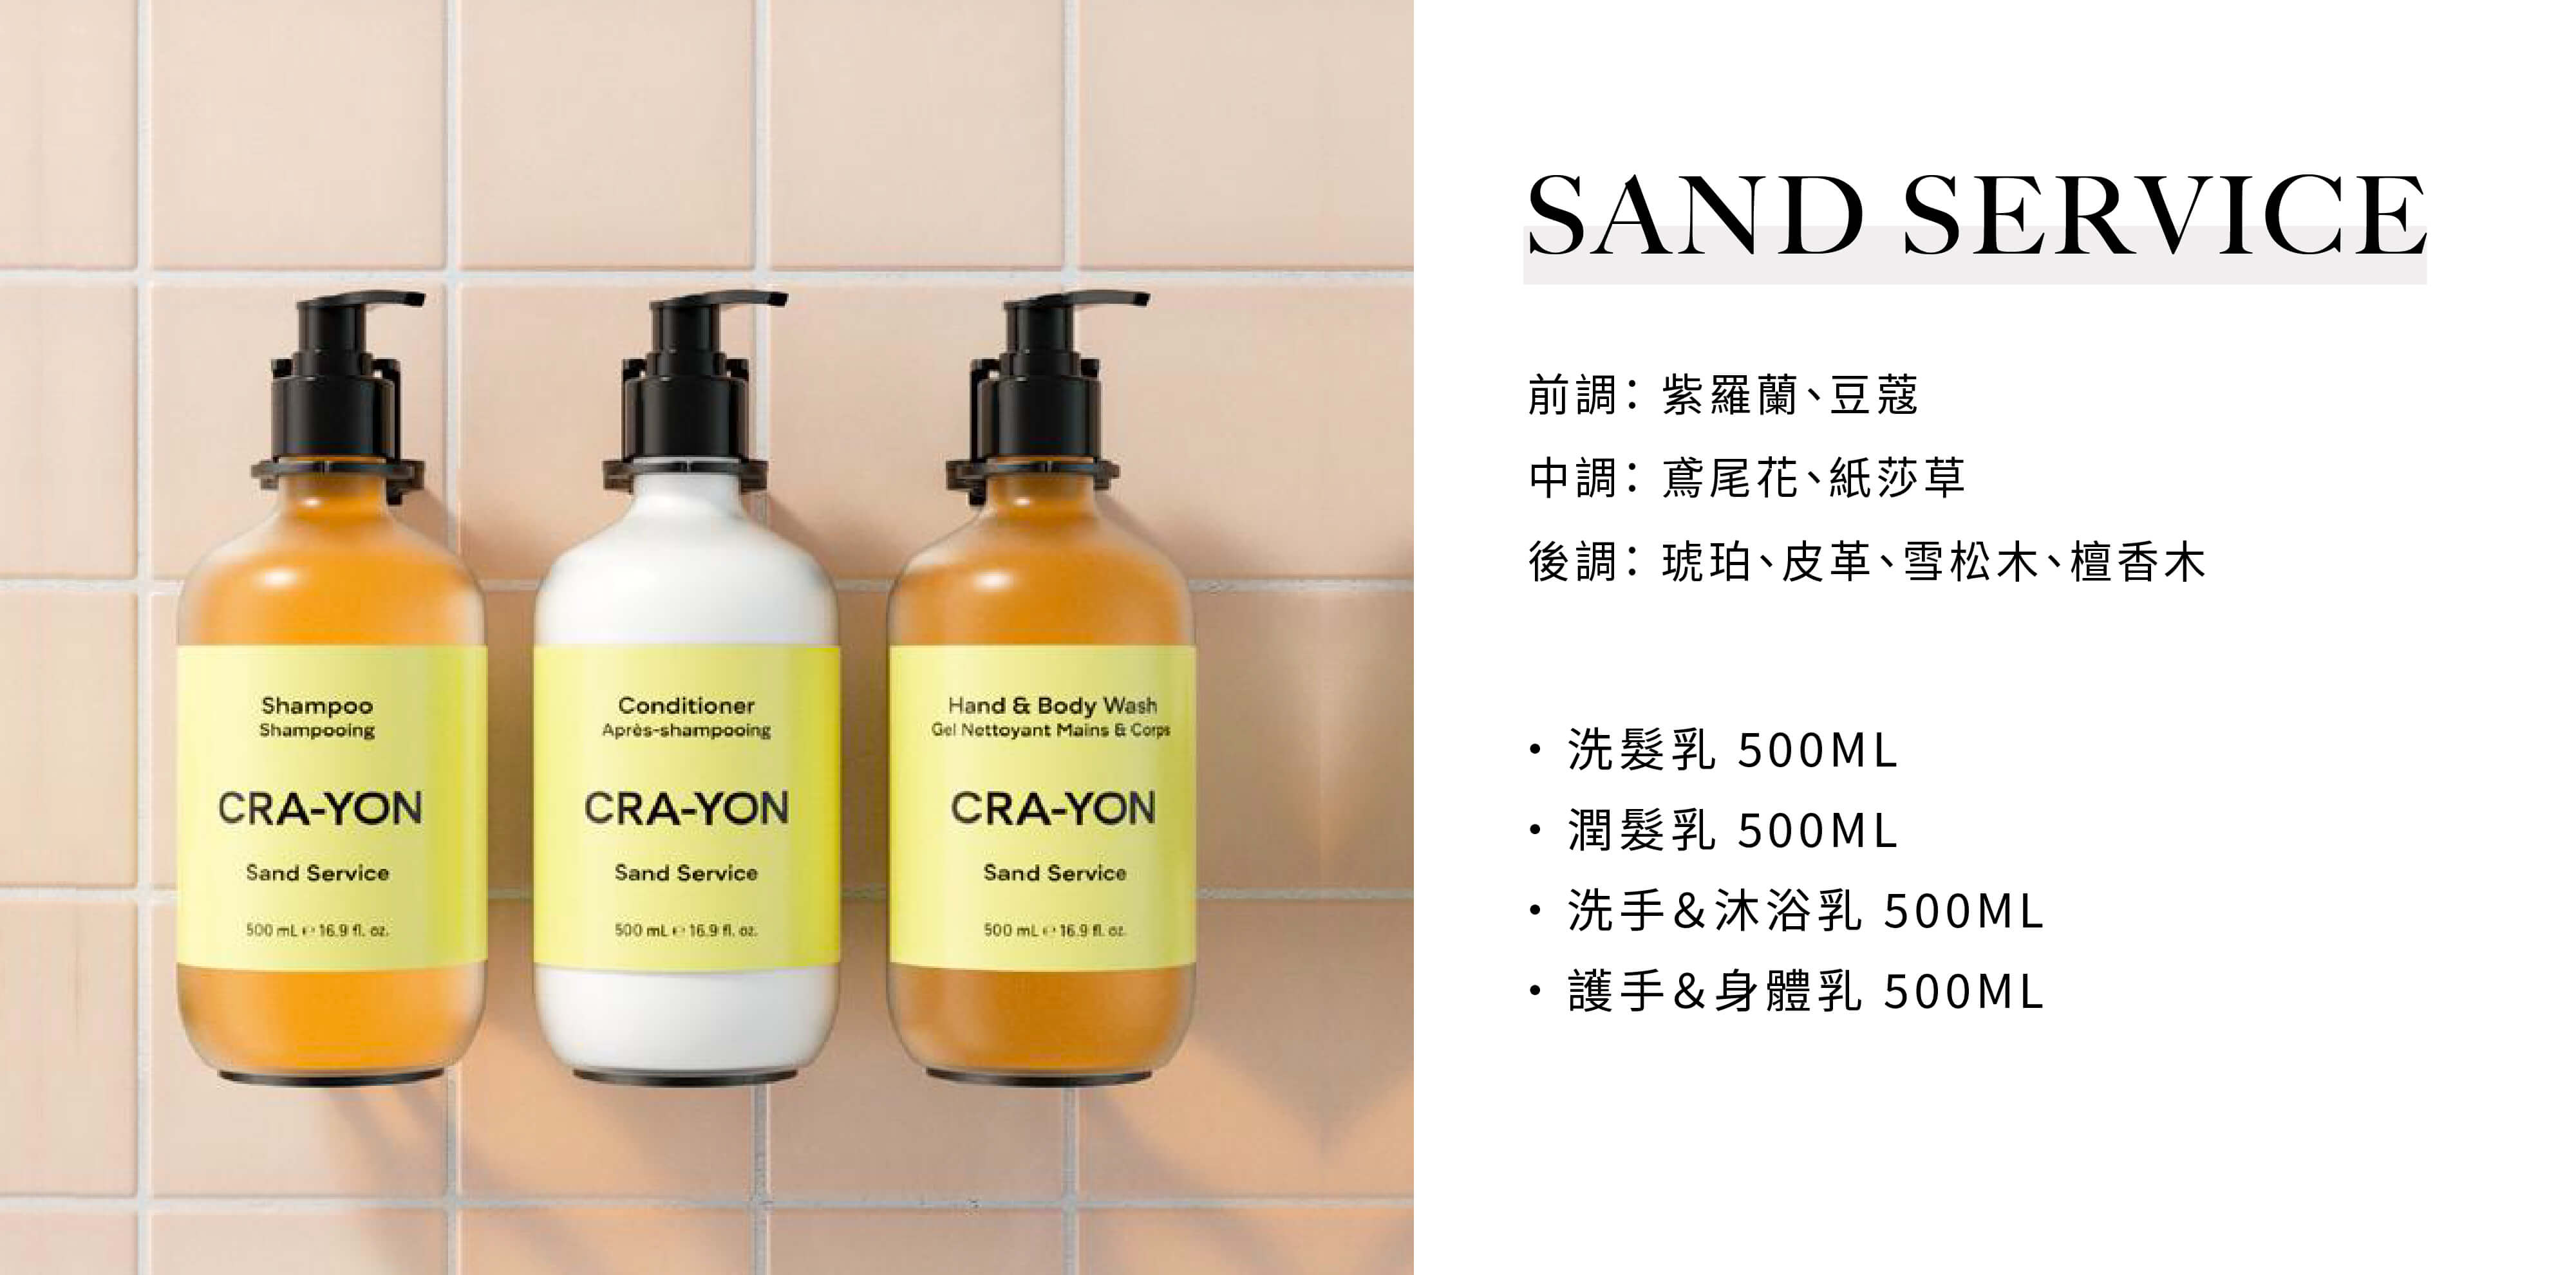 CRA-YON 飯店民宿沐浴用品Sand Service系列，由Sunlife飯店沐浴配品供應商提供